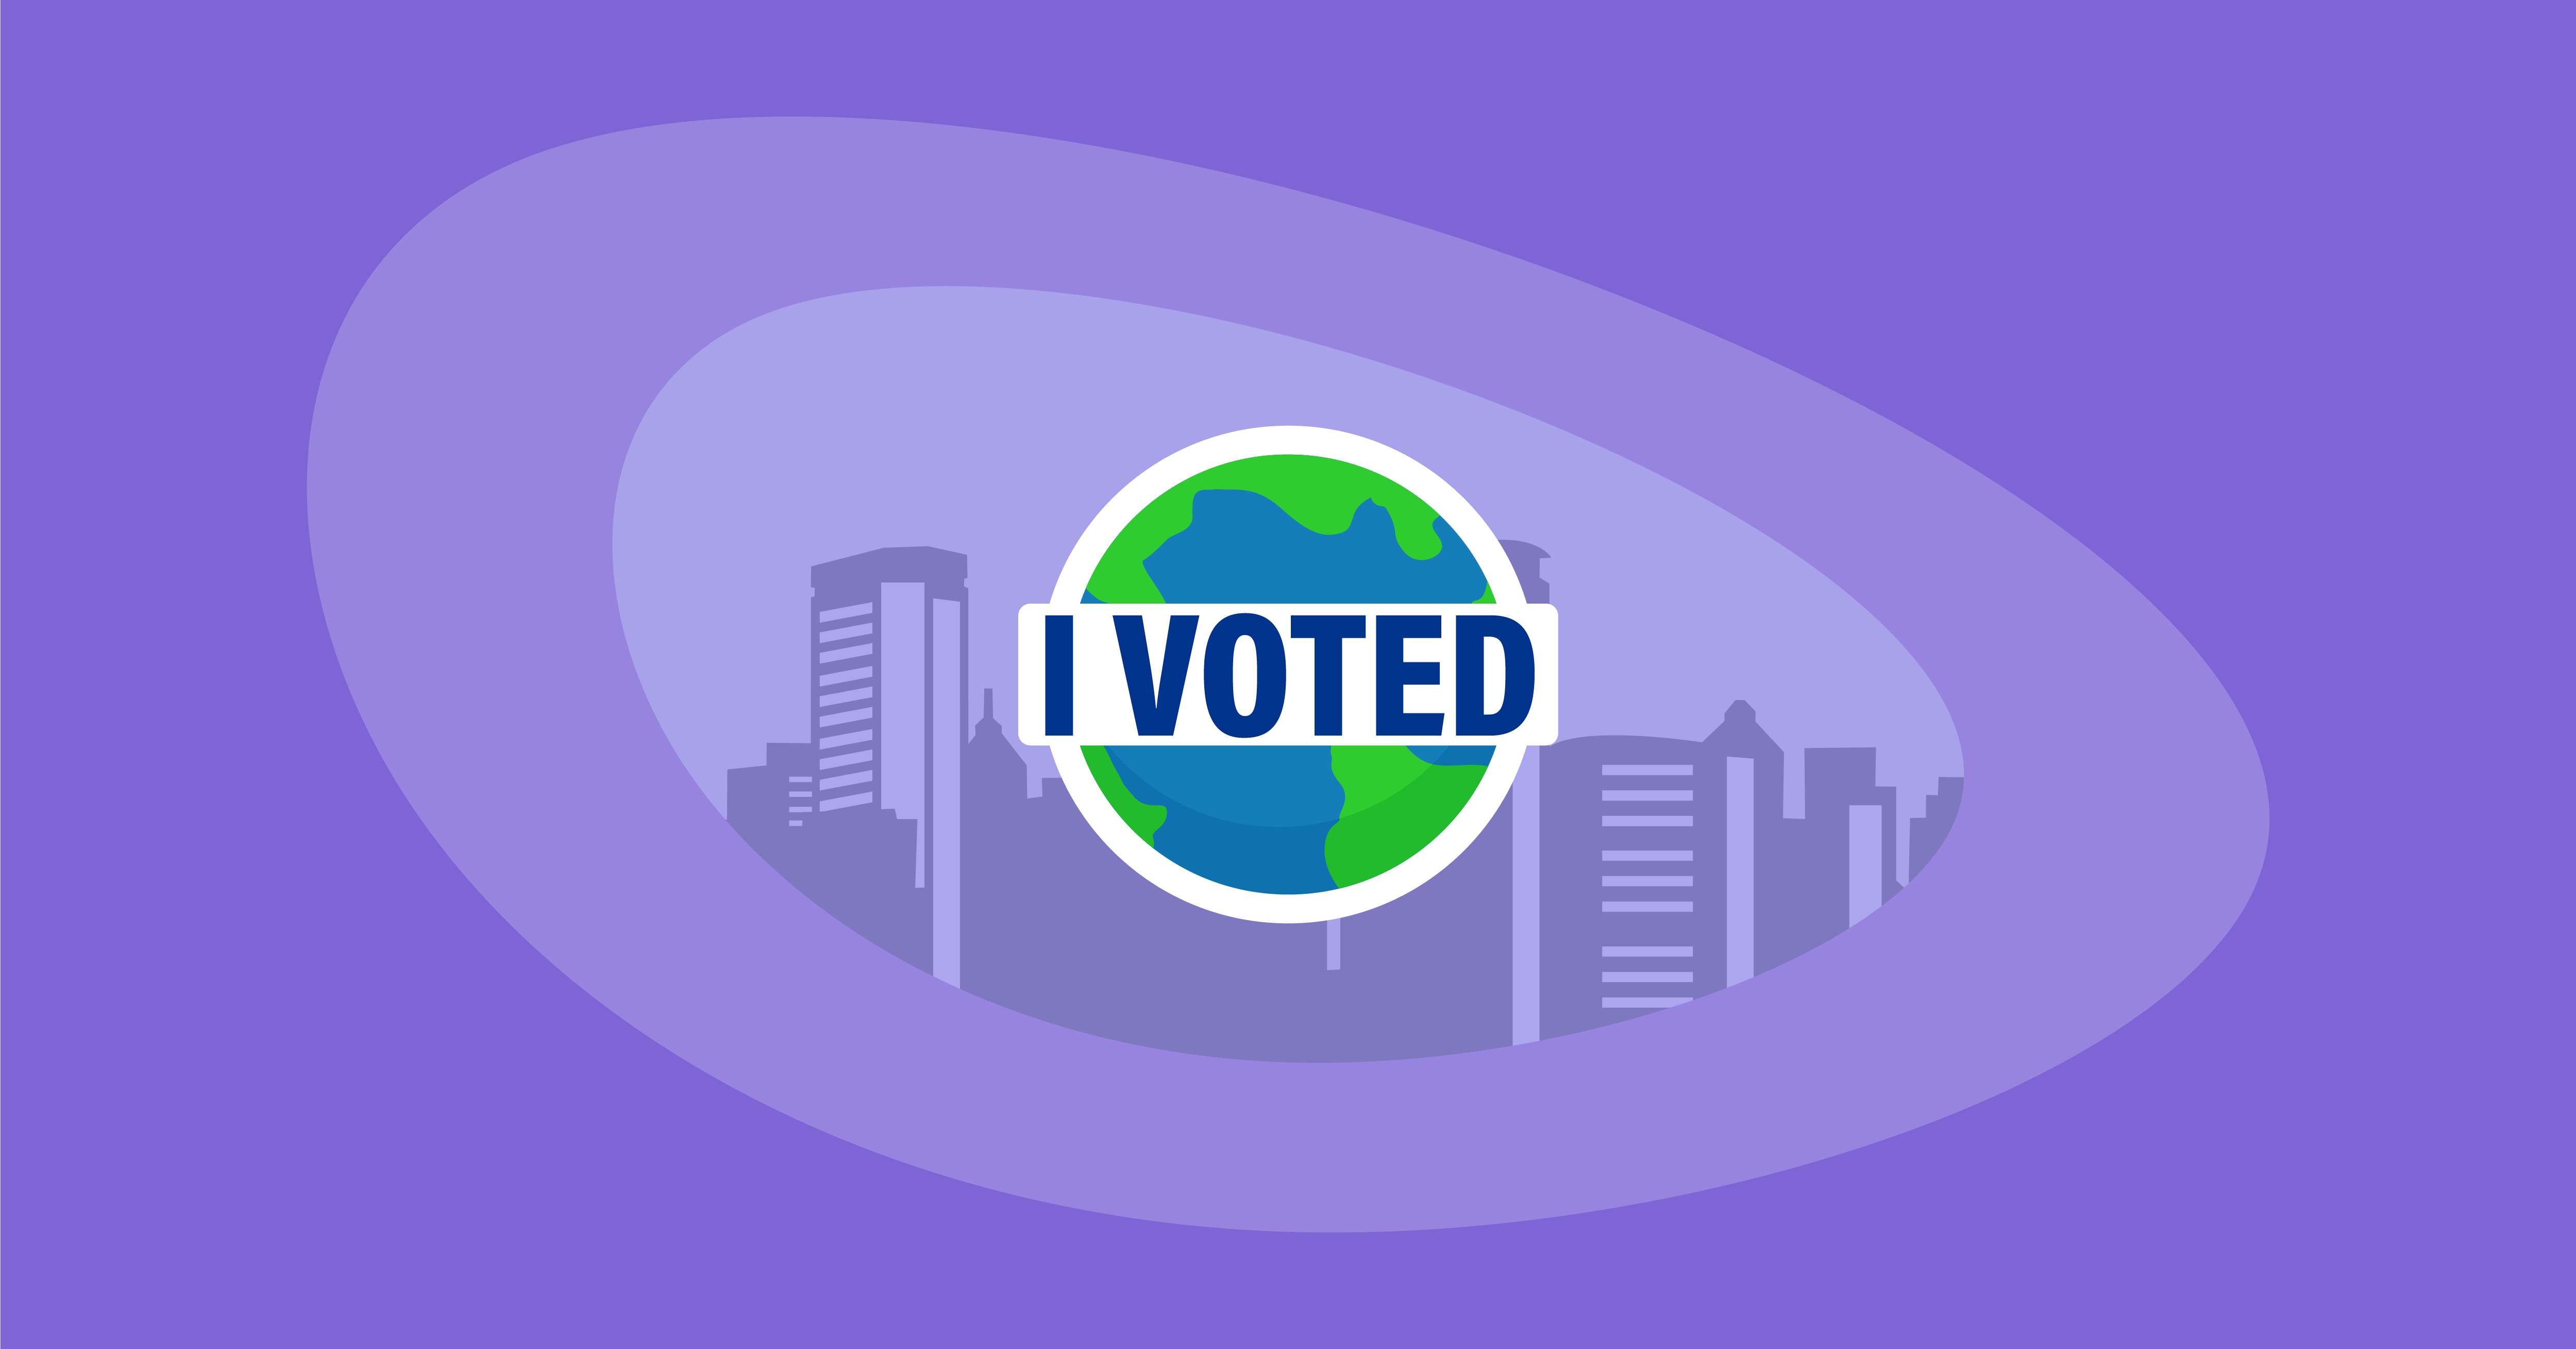 Illustration of an "I voted" badge